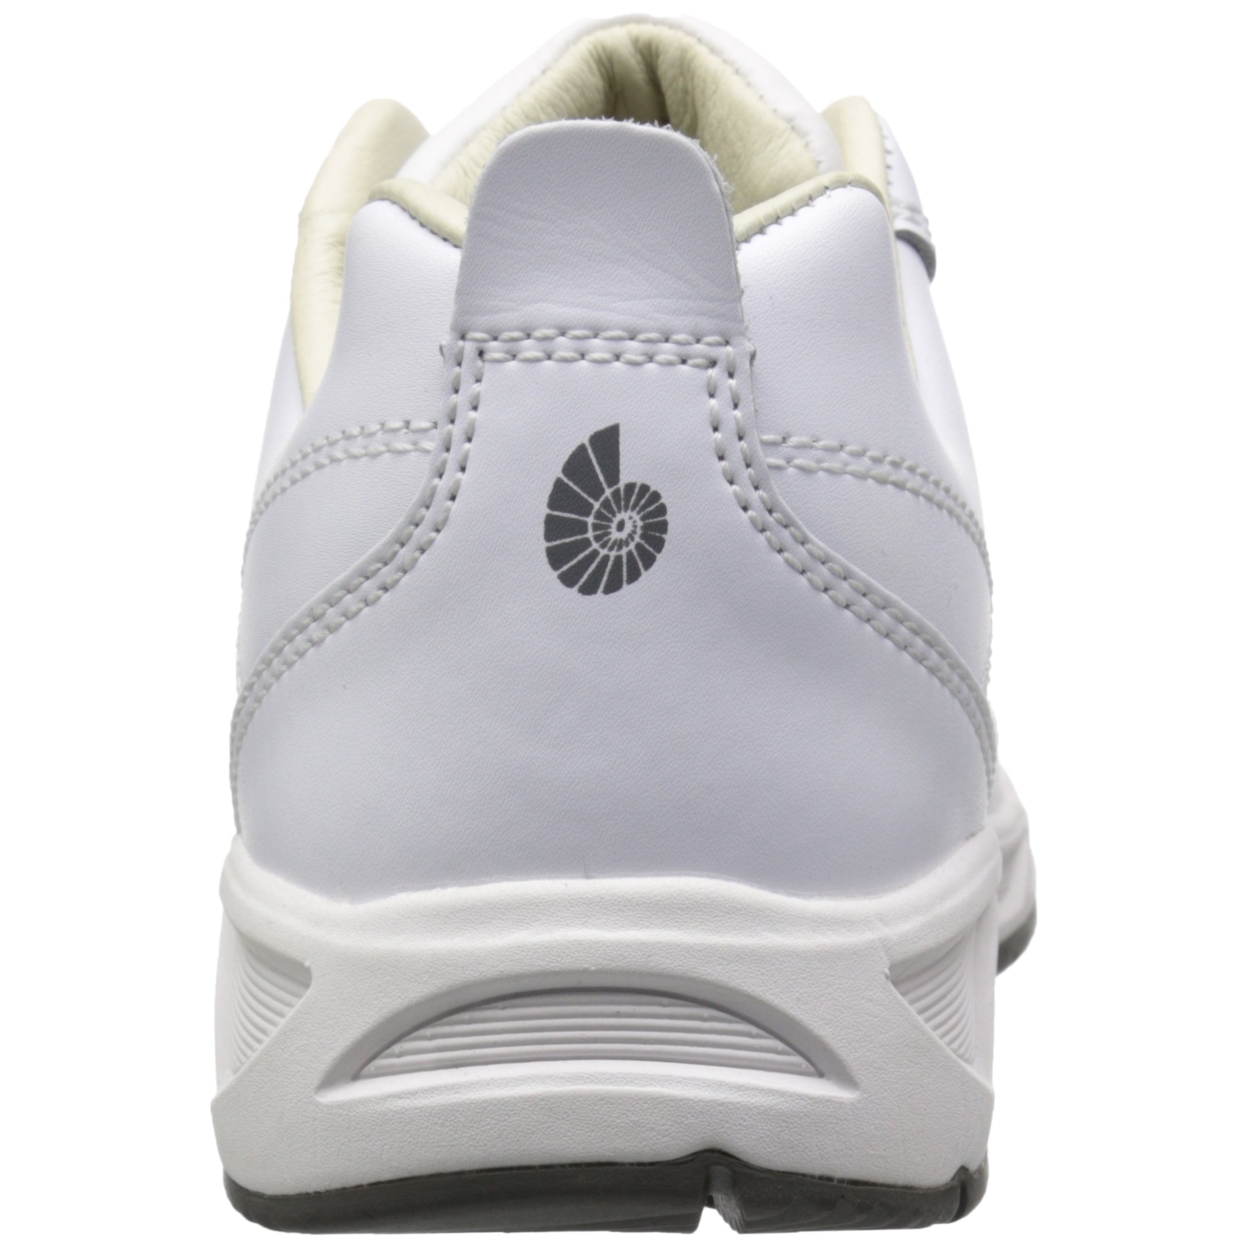 FSI FOOTWEAR SPECIALTIES INTERNATIONAL NAUTILUS Nautilus 4046 ESD No Exposed Metal Soft Toe Clean Room Athletic Shoe WHITE - WHITE, 7-W